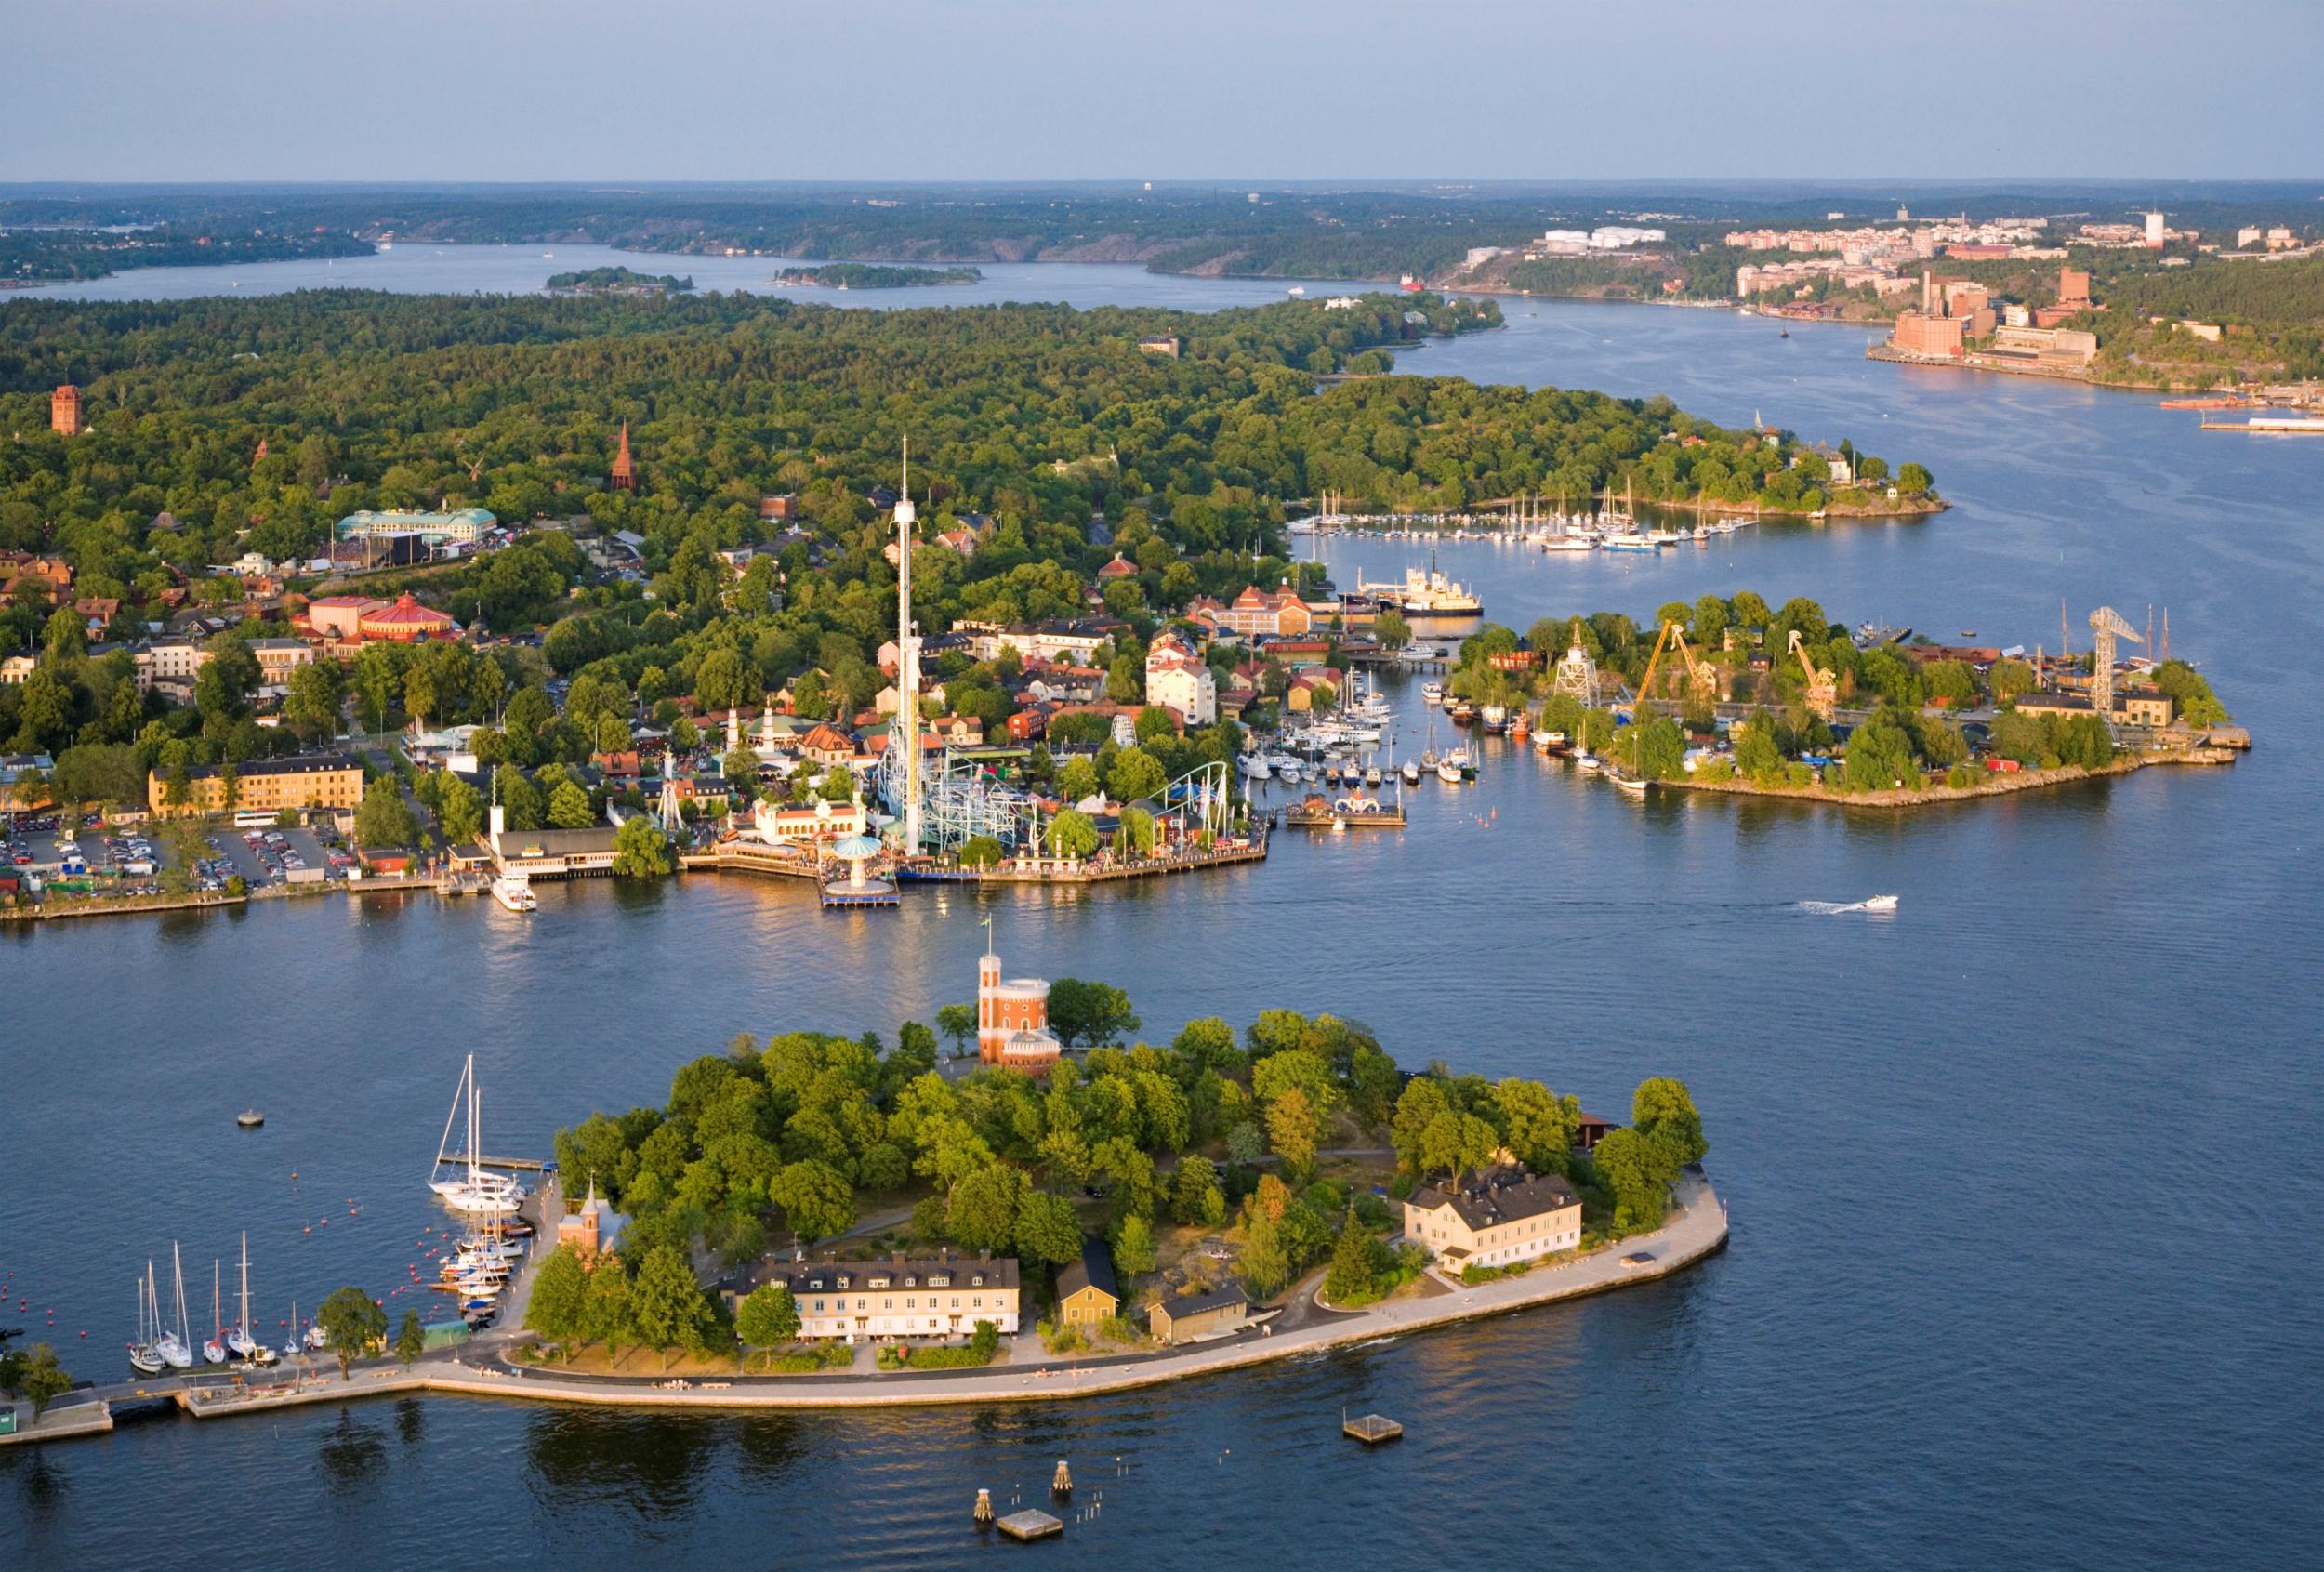 Enjoy Midsommar on the Stockholm archipelago